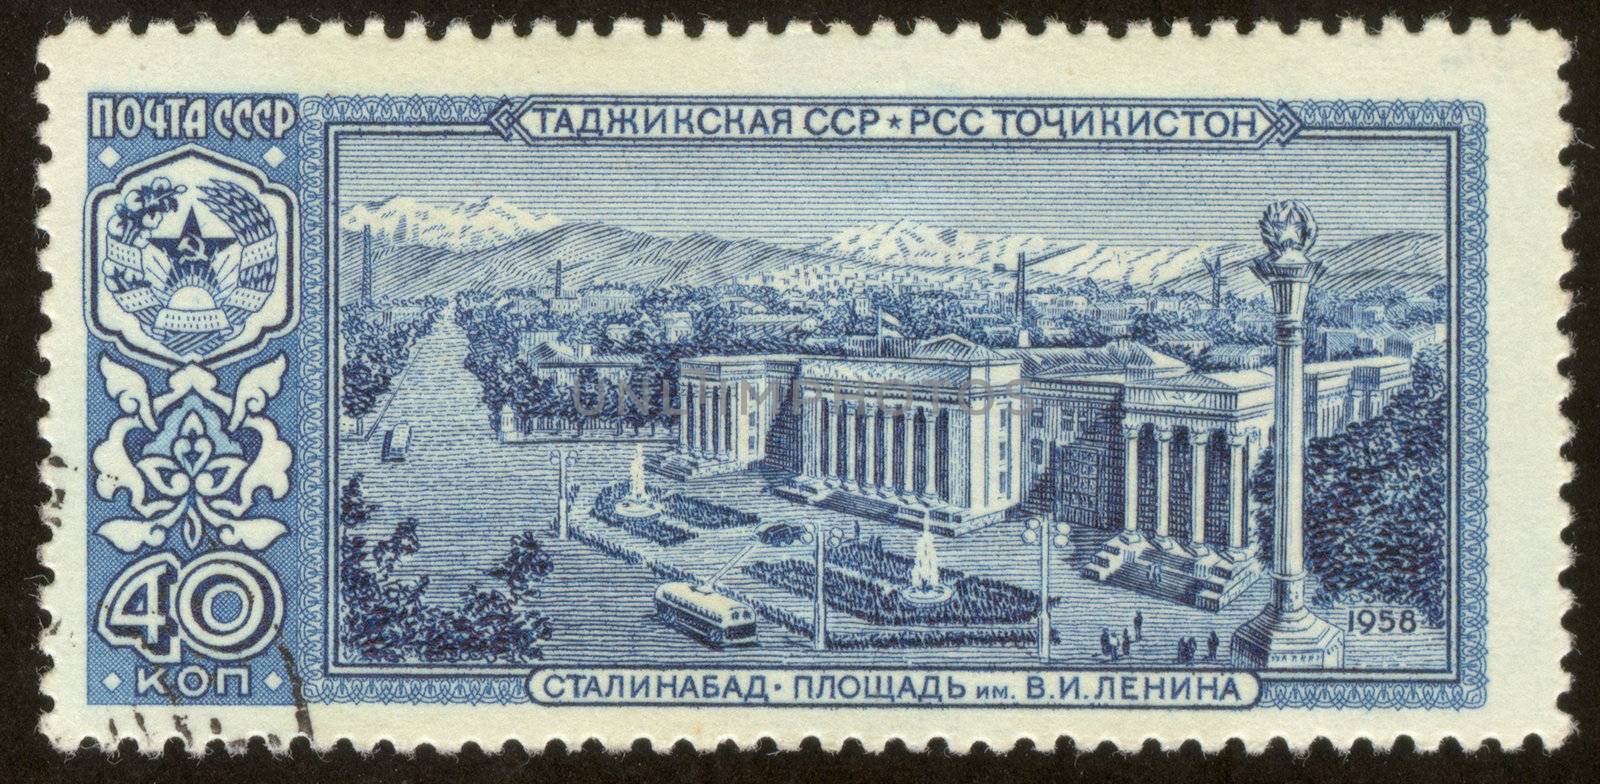 The scanned stamp. The Soviet stamp. City capital of Tajikistan.